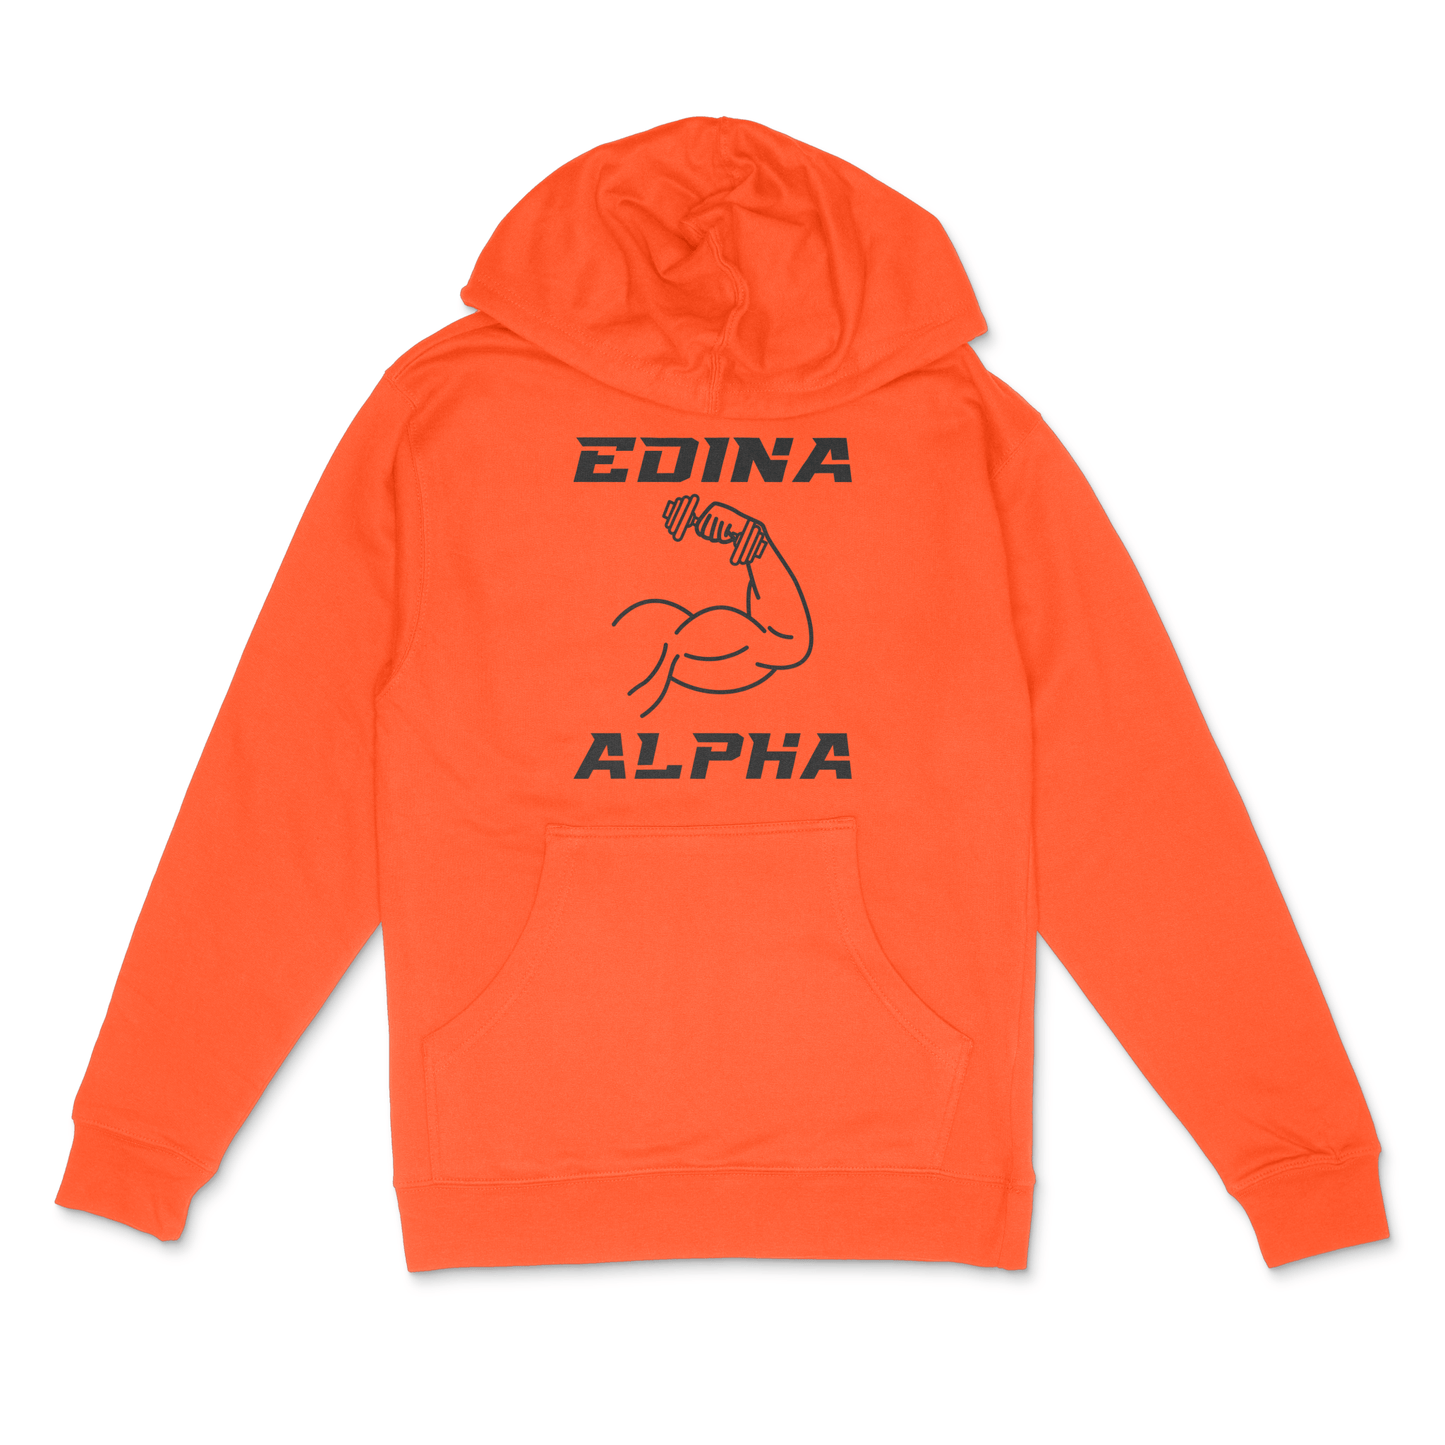 Edina Alpha Unisex Midweight Hooded Sweatshirt - DSP On Demand